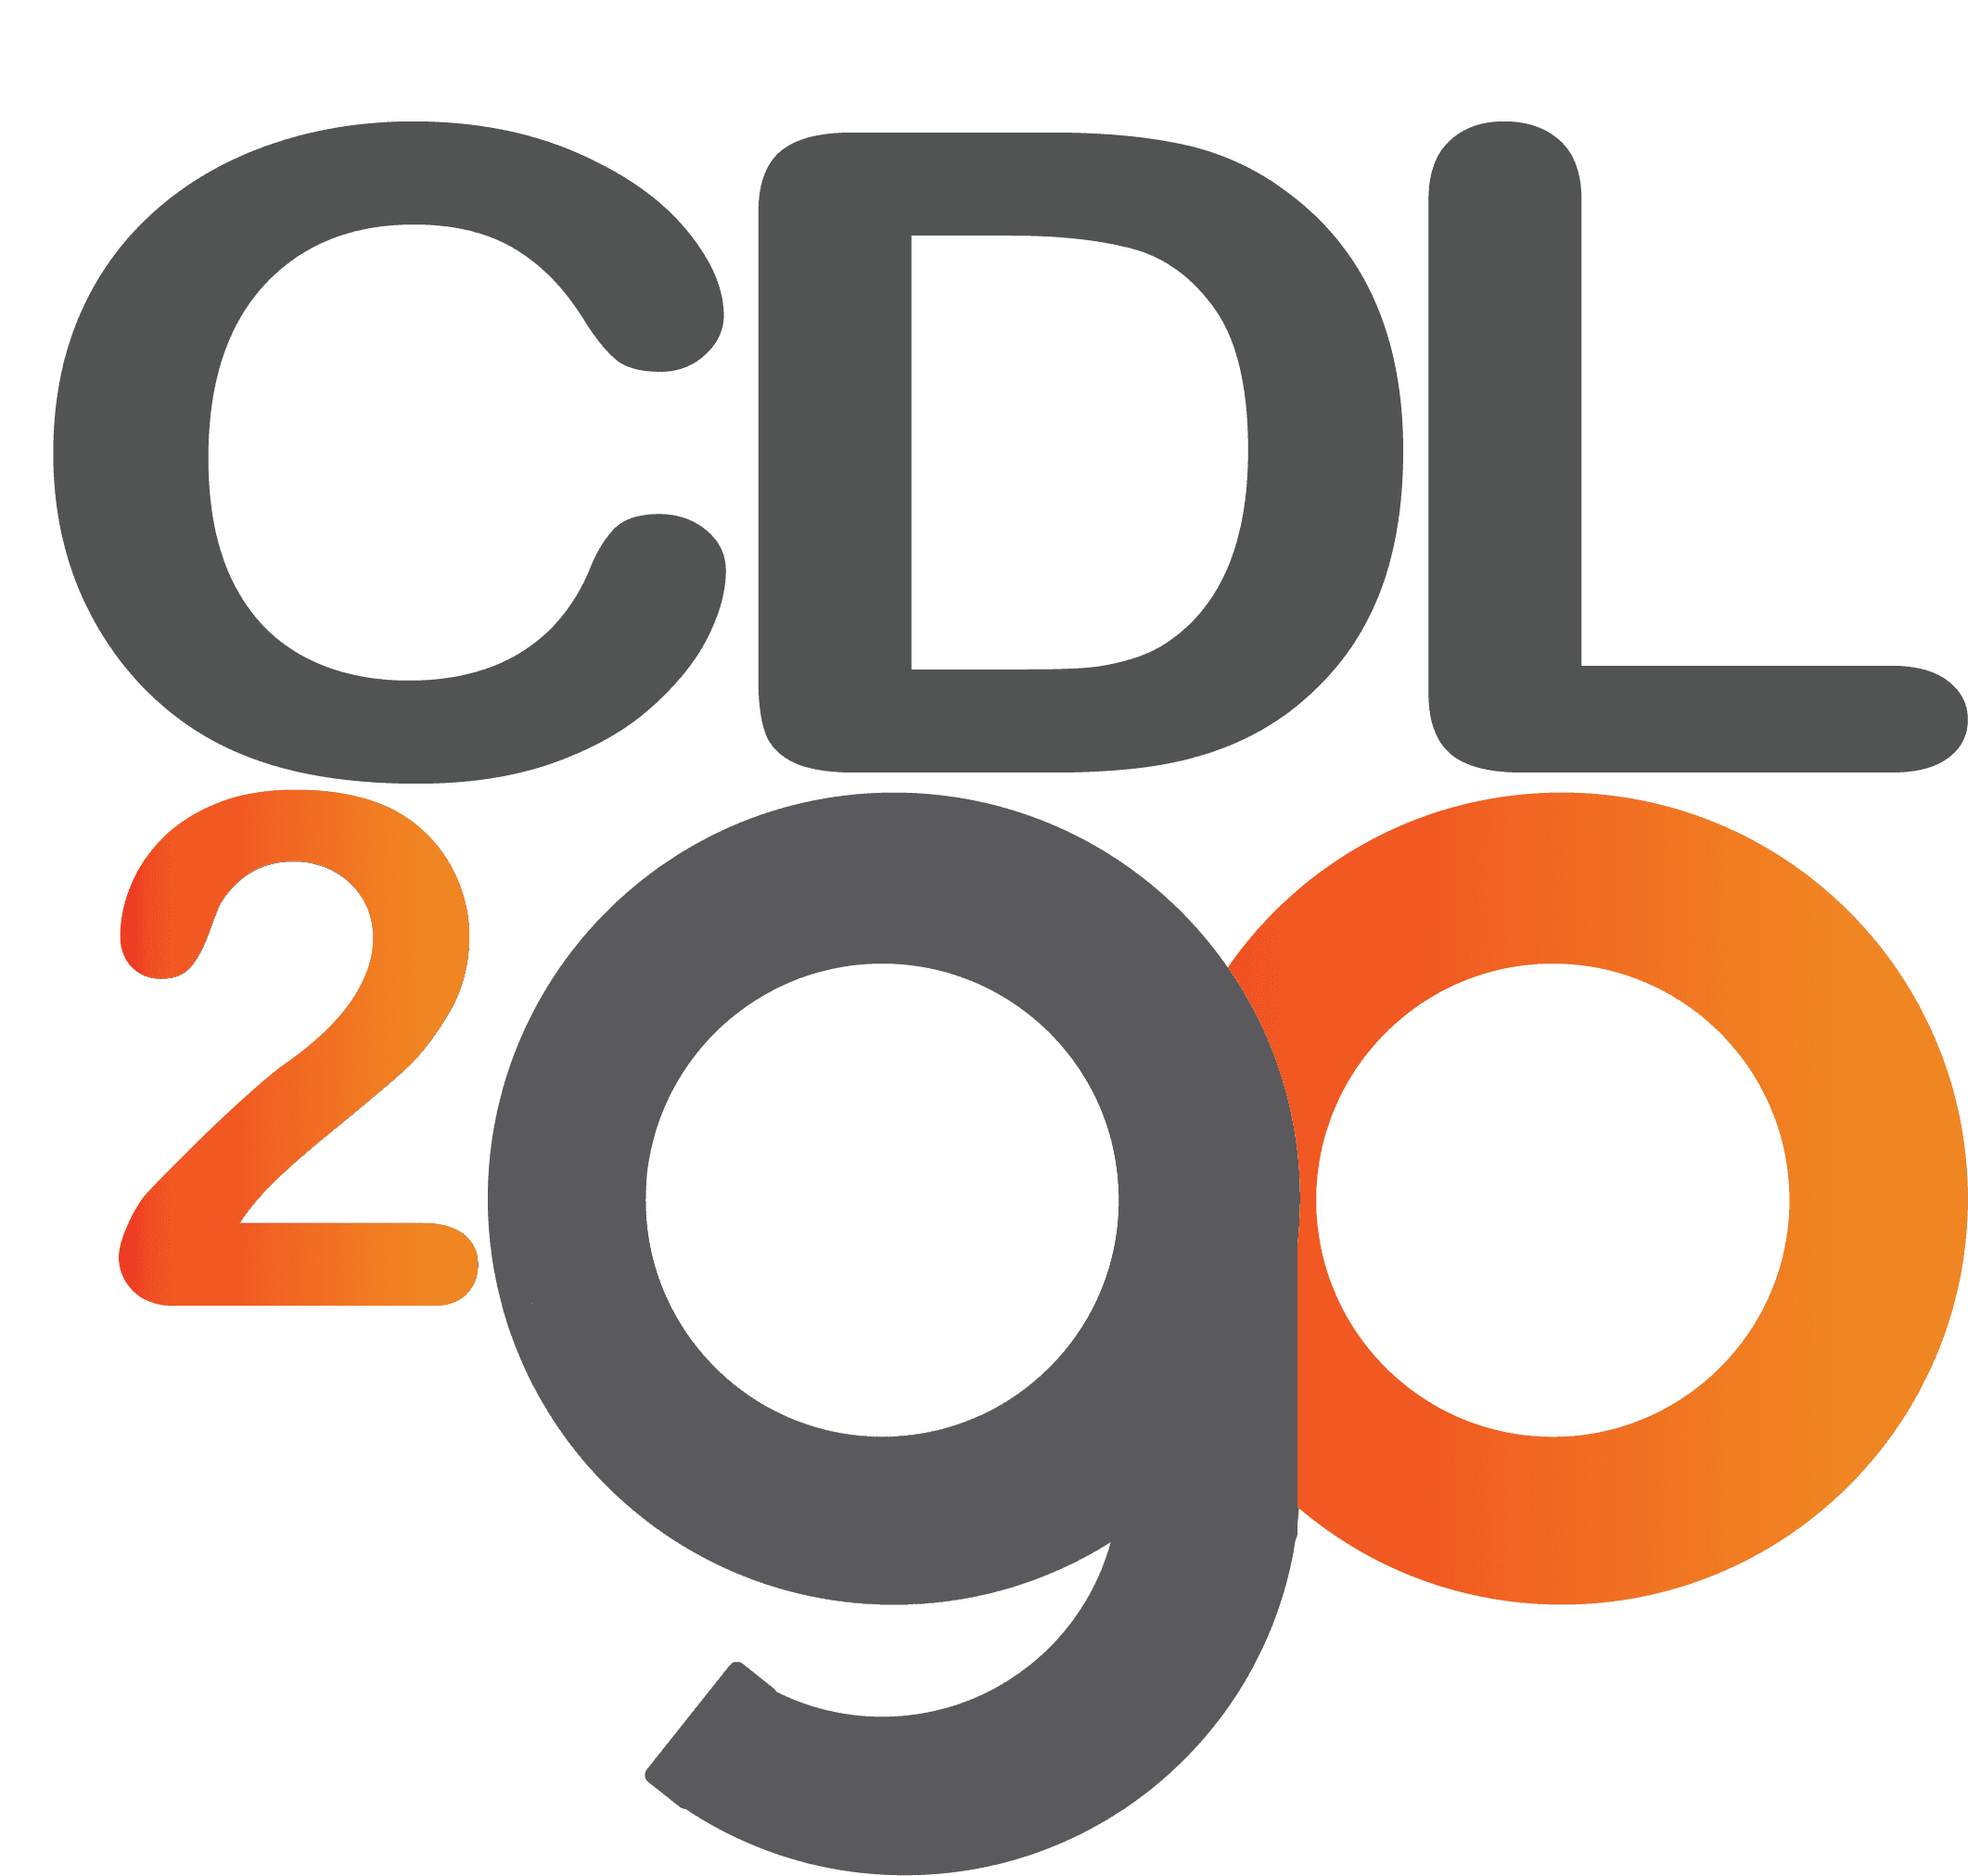 CDL2Go – ELDT Theory Training